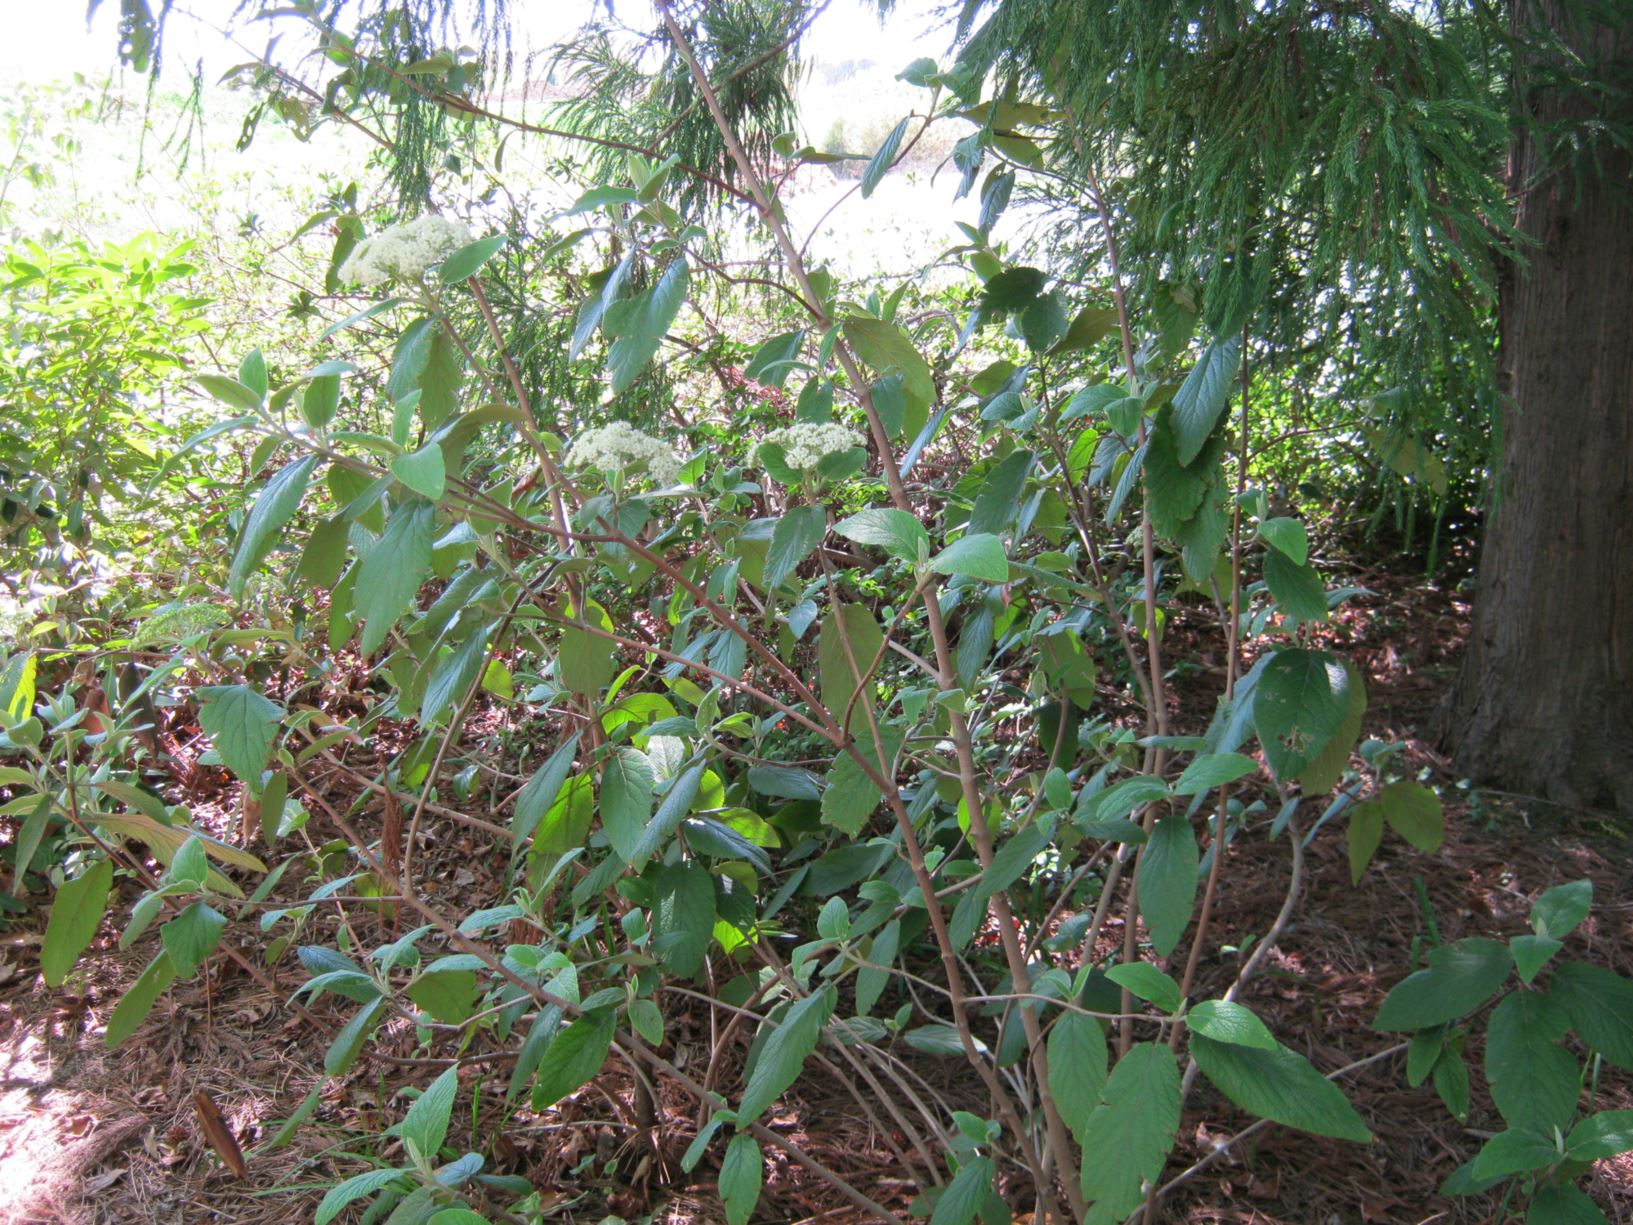 Viburnum × rhytidophylloides 'Willow Wood' - lantanaphyllum viburnum